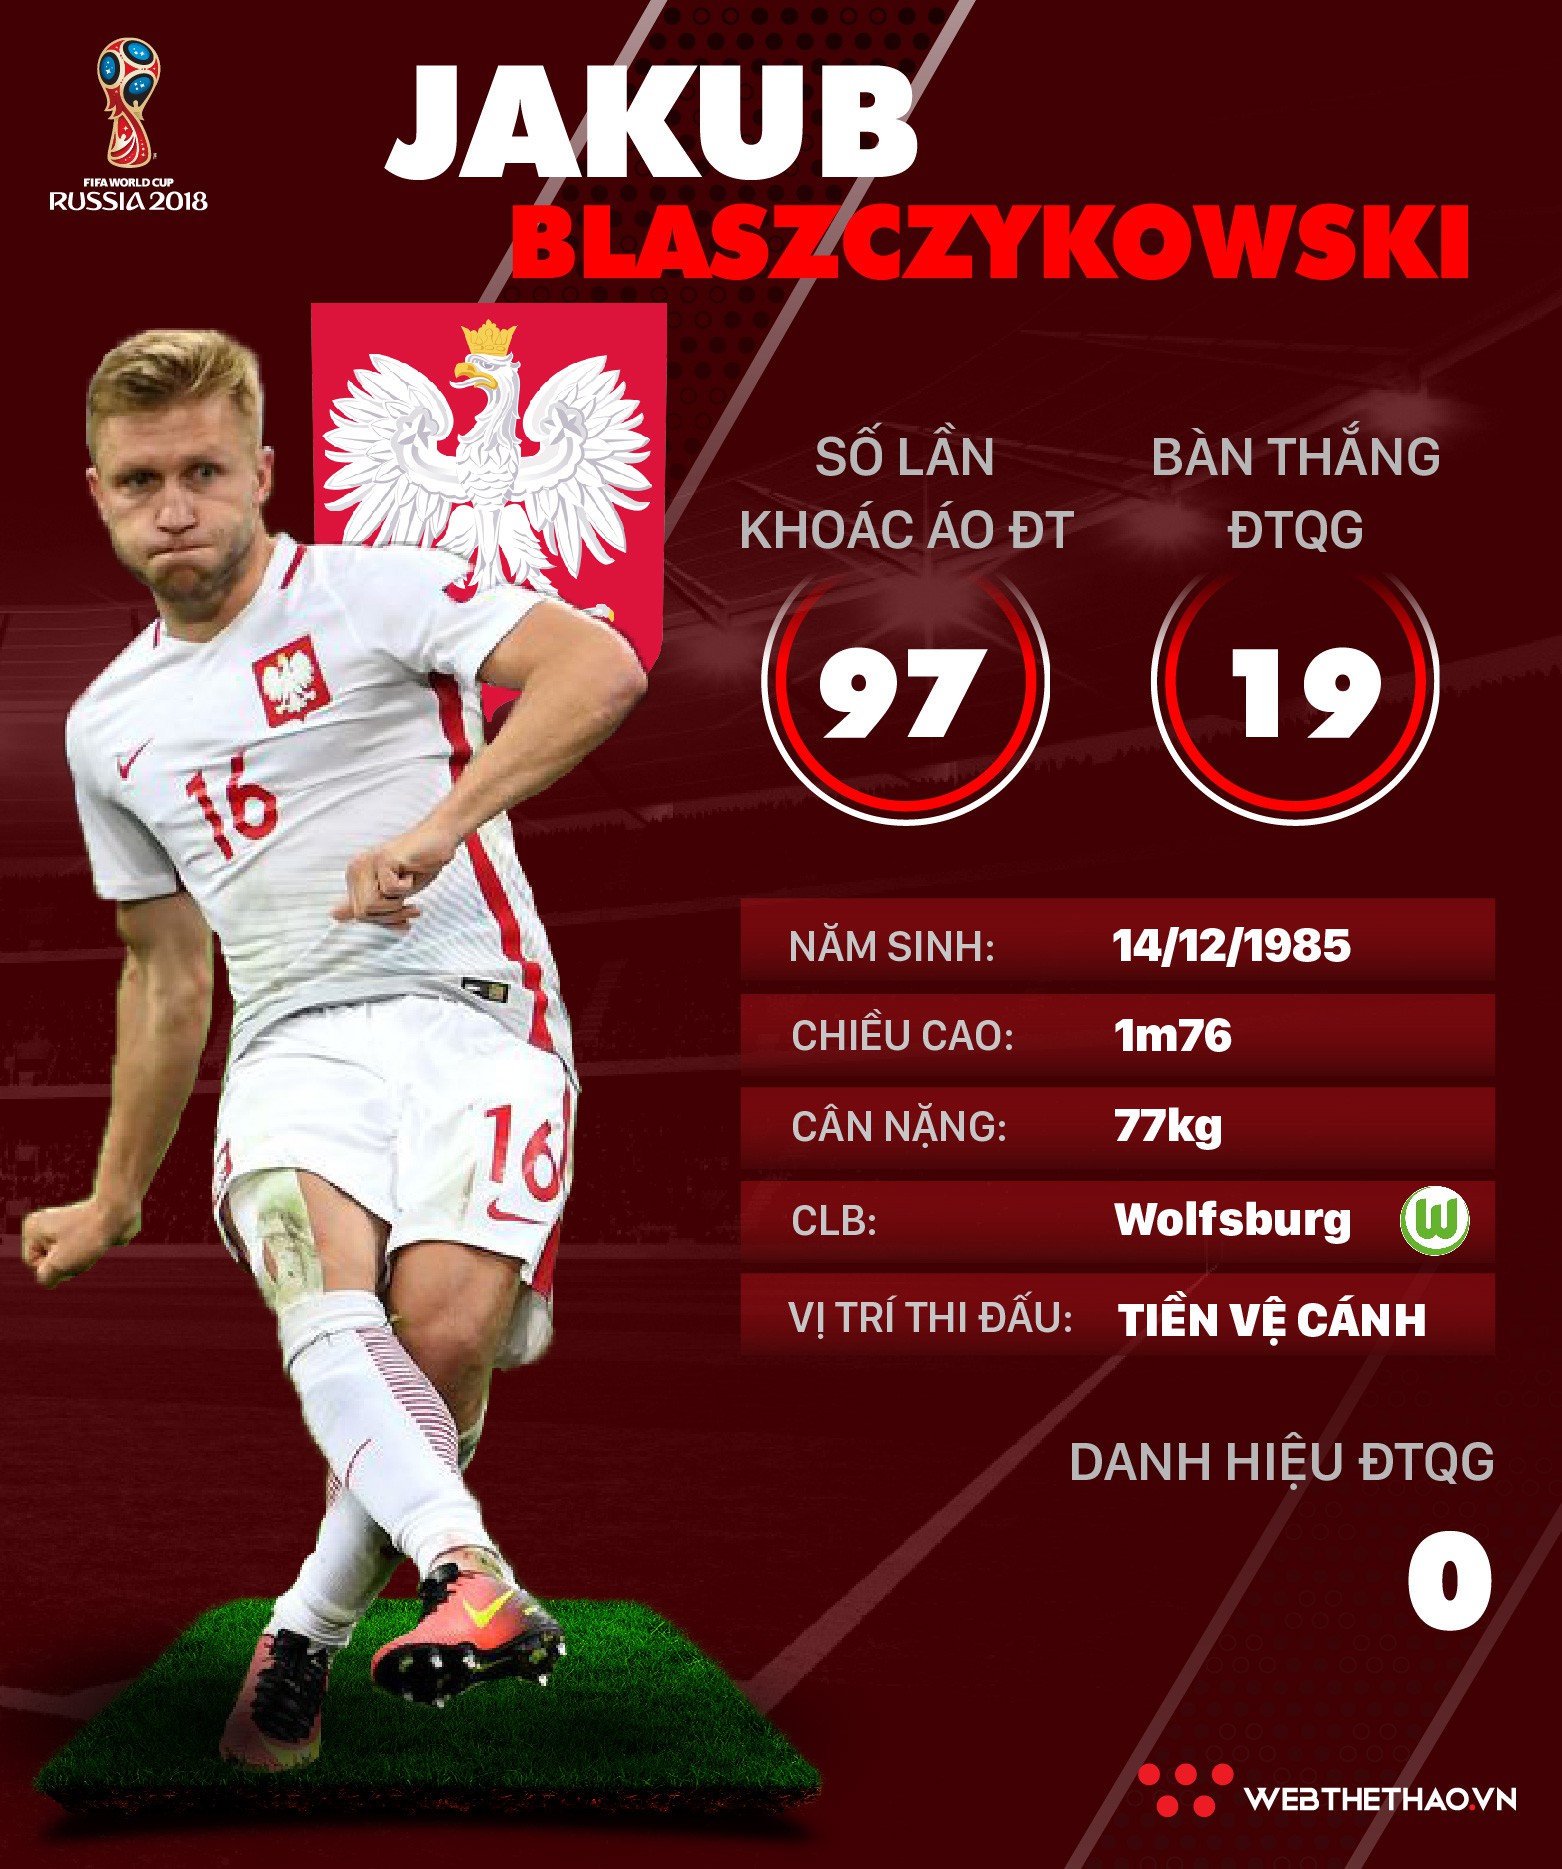 Thông tin cầu thủ Jakub Blaszczykowski của ĐT Ba Lan dự World Cup 2018 - Ảnh 1.